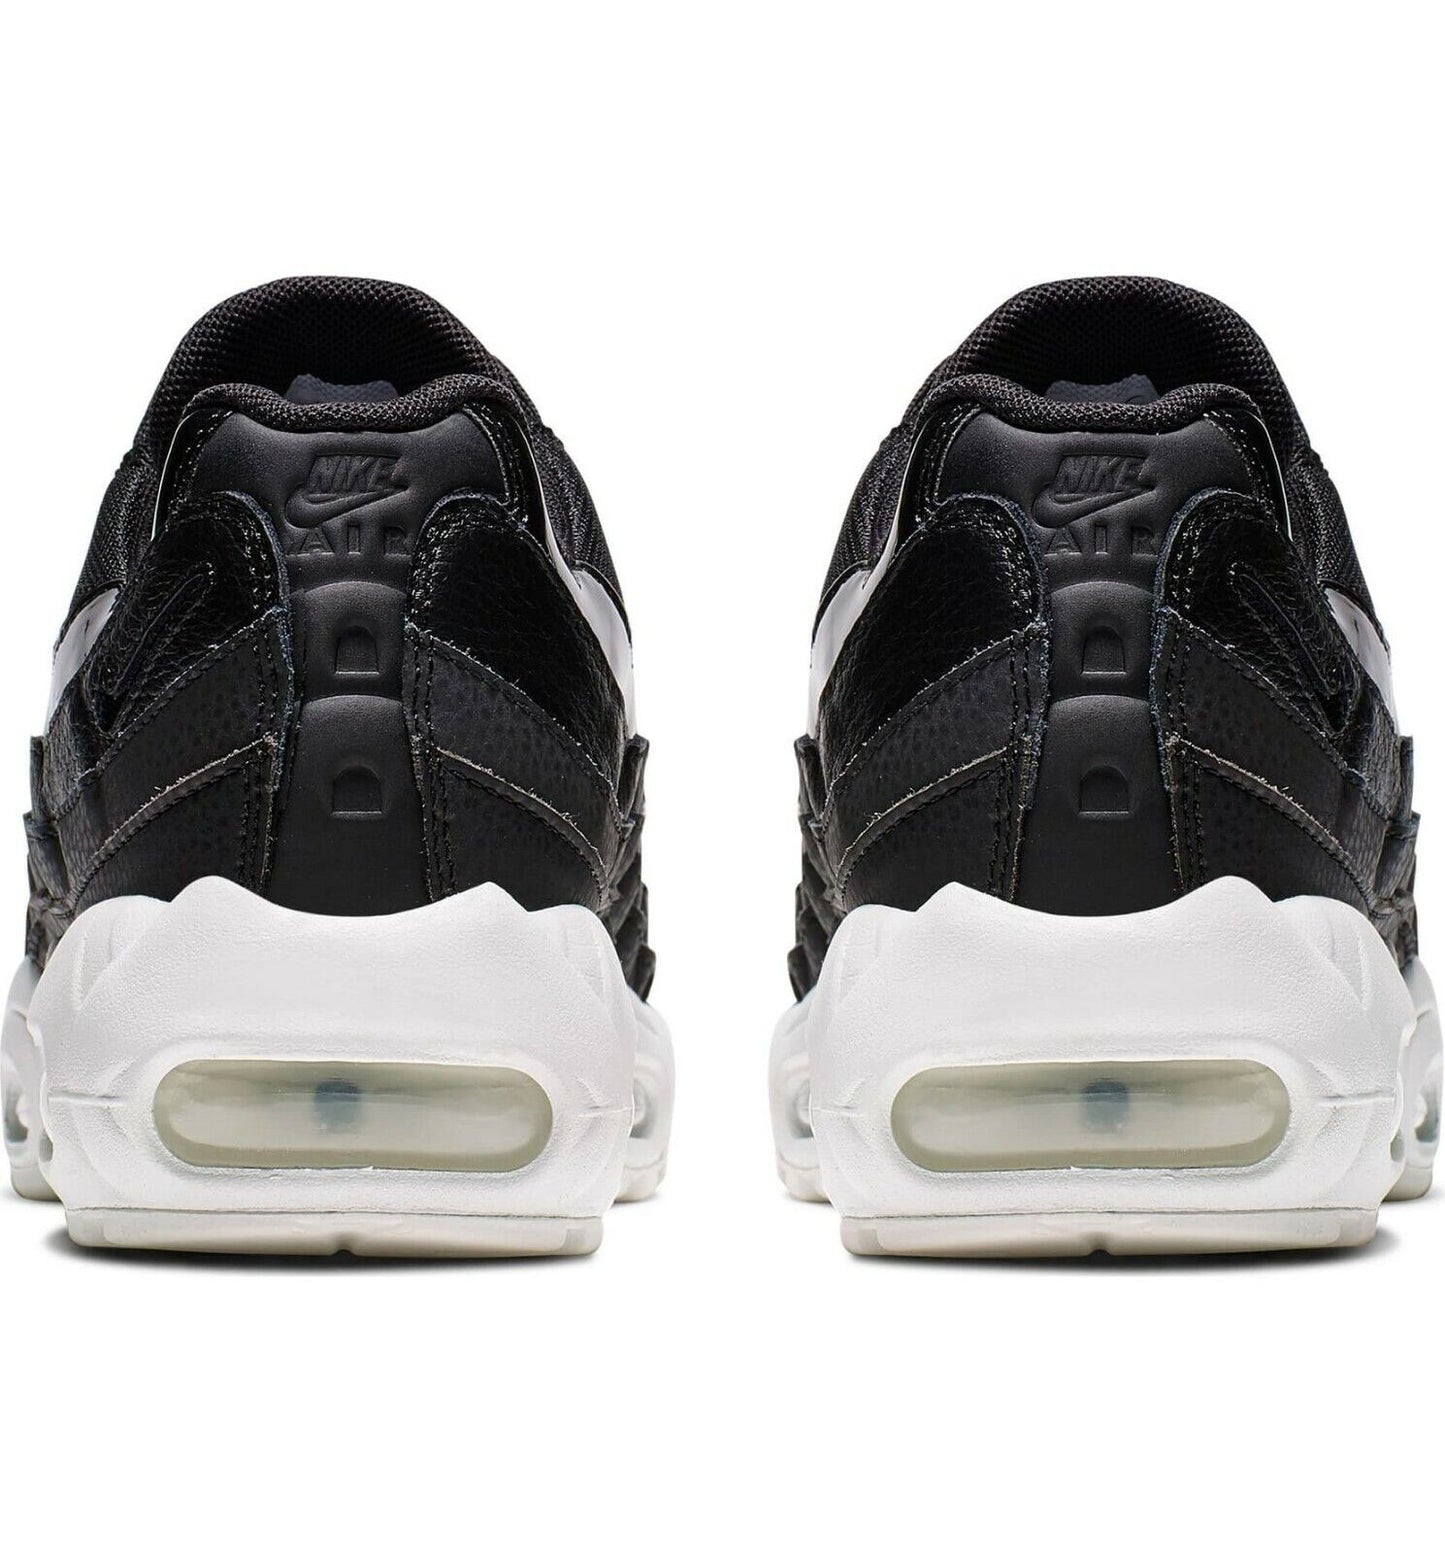 Women's Nike Air Max 95 SE Running Shoes, AQ4138 001 Multi Sizes Black/Sum White